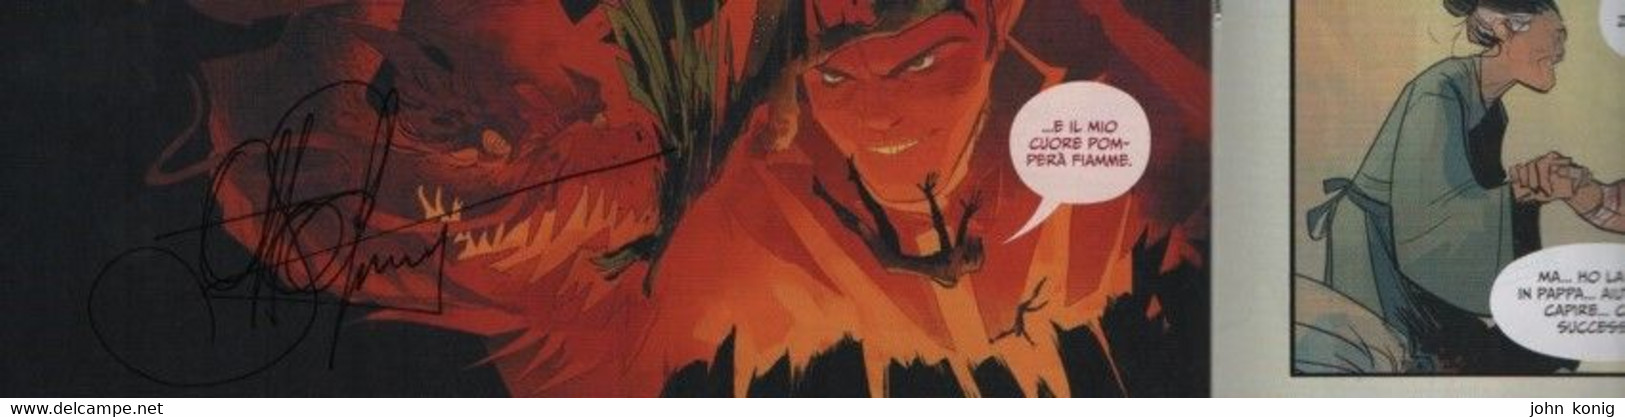 DC COMICS / RW LION - Flash N 3 Ristampa (Universo Rinascita) Firmato Da Otto Schmidt (ad Etna Comics 2017 - Super Héros